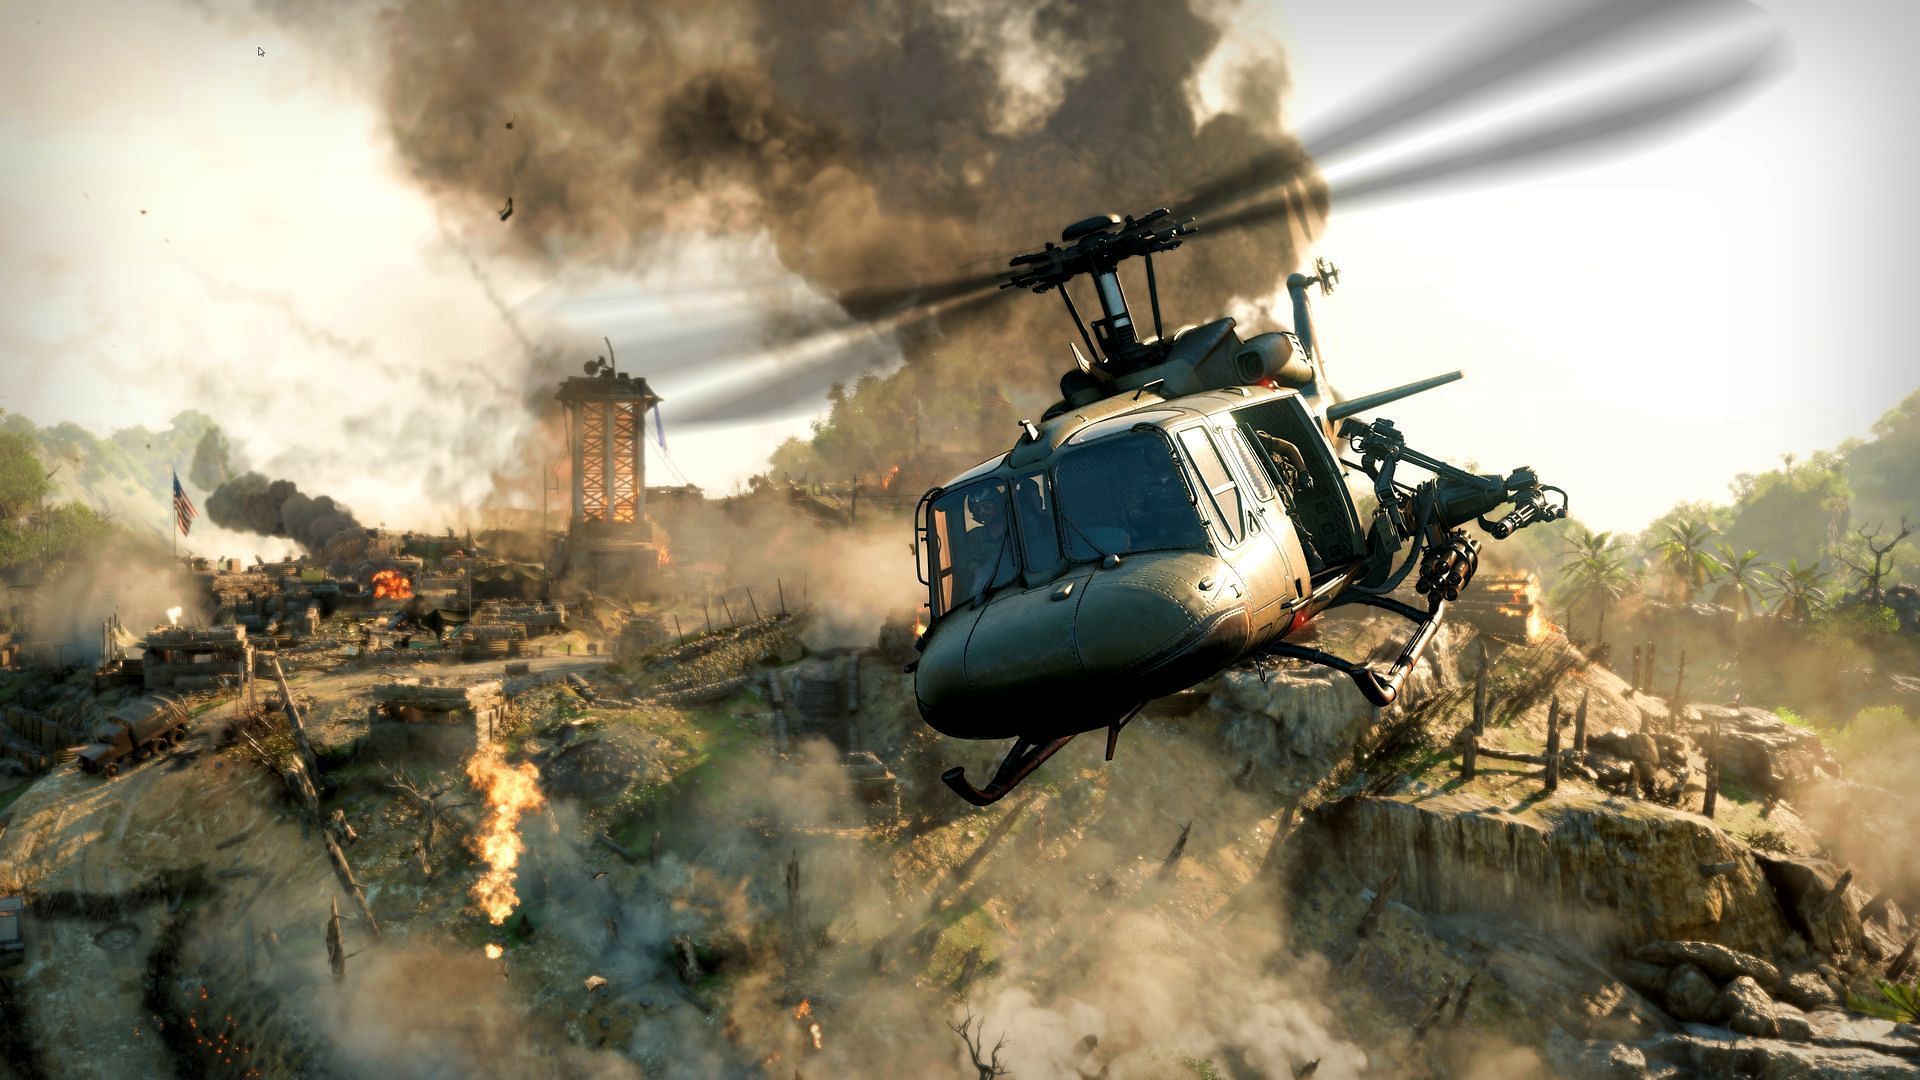 Black ops Gulf War - a chopper